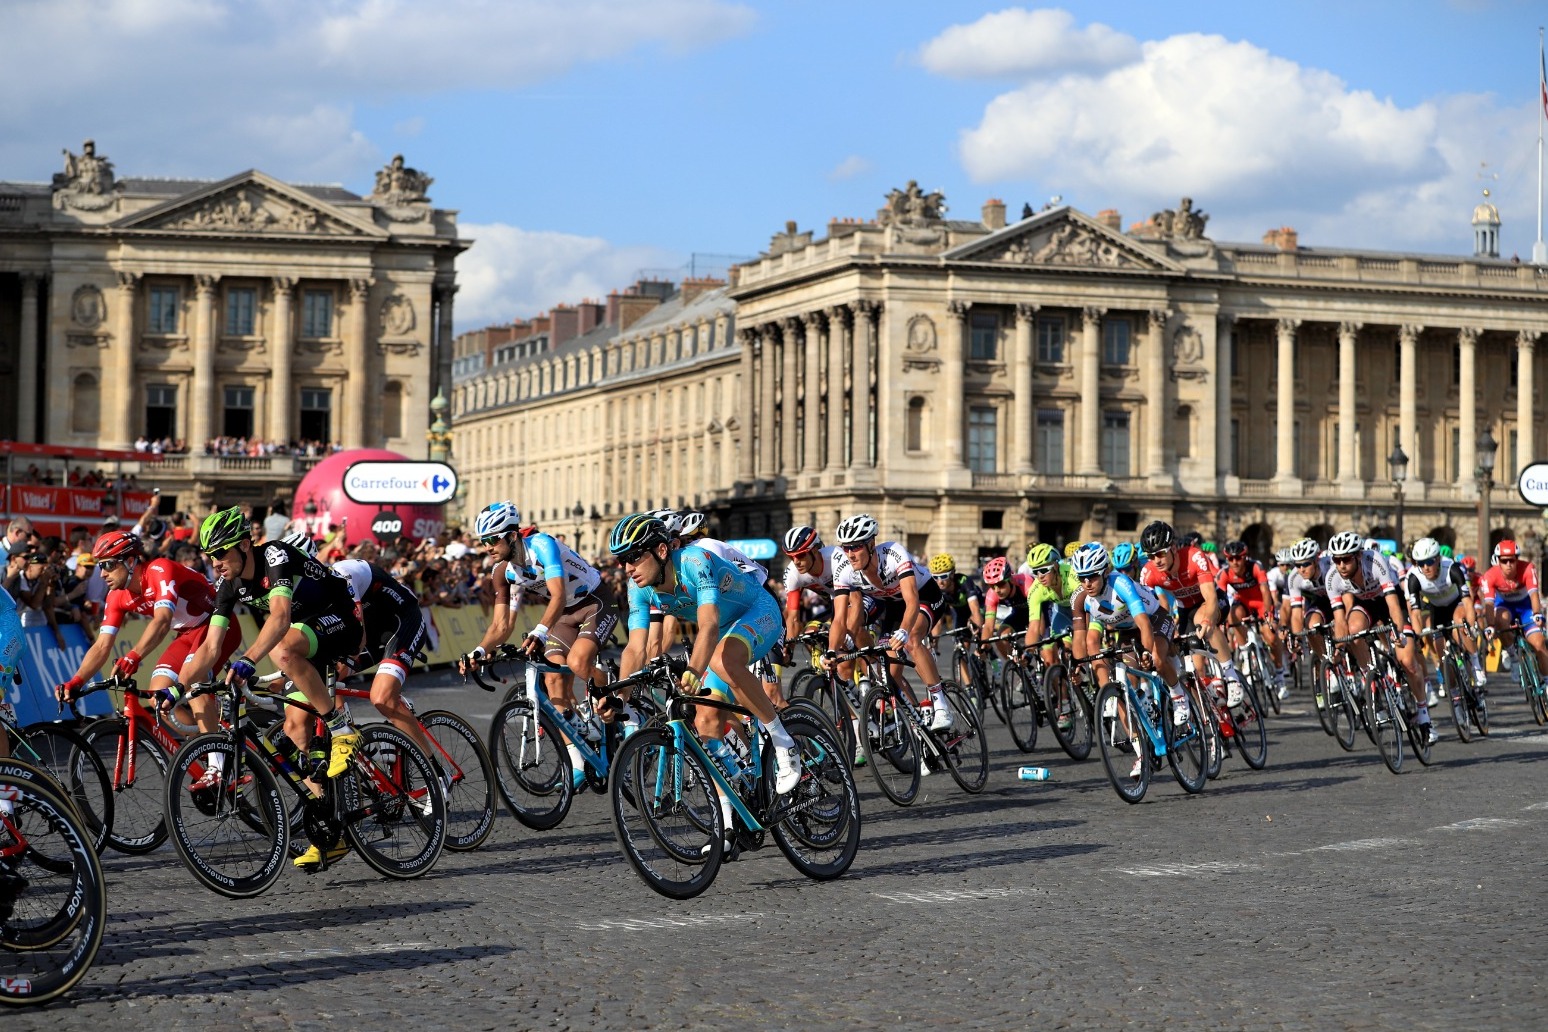 Brutally mountainous route awaits Tour de France riders next summer 